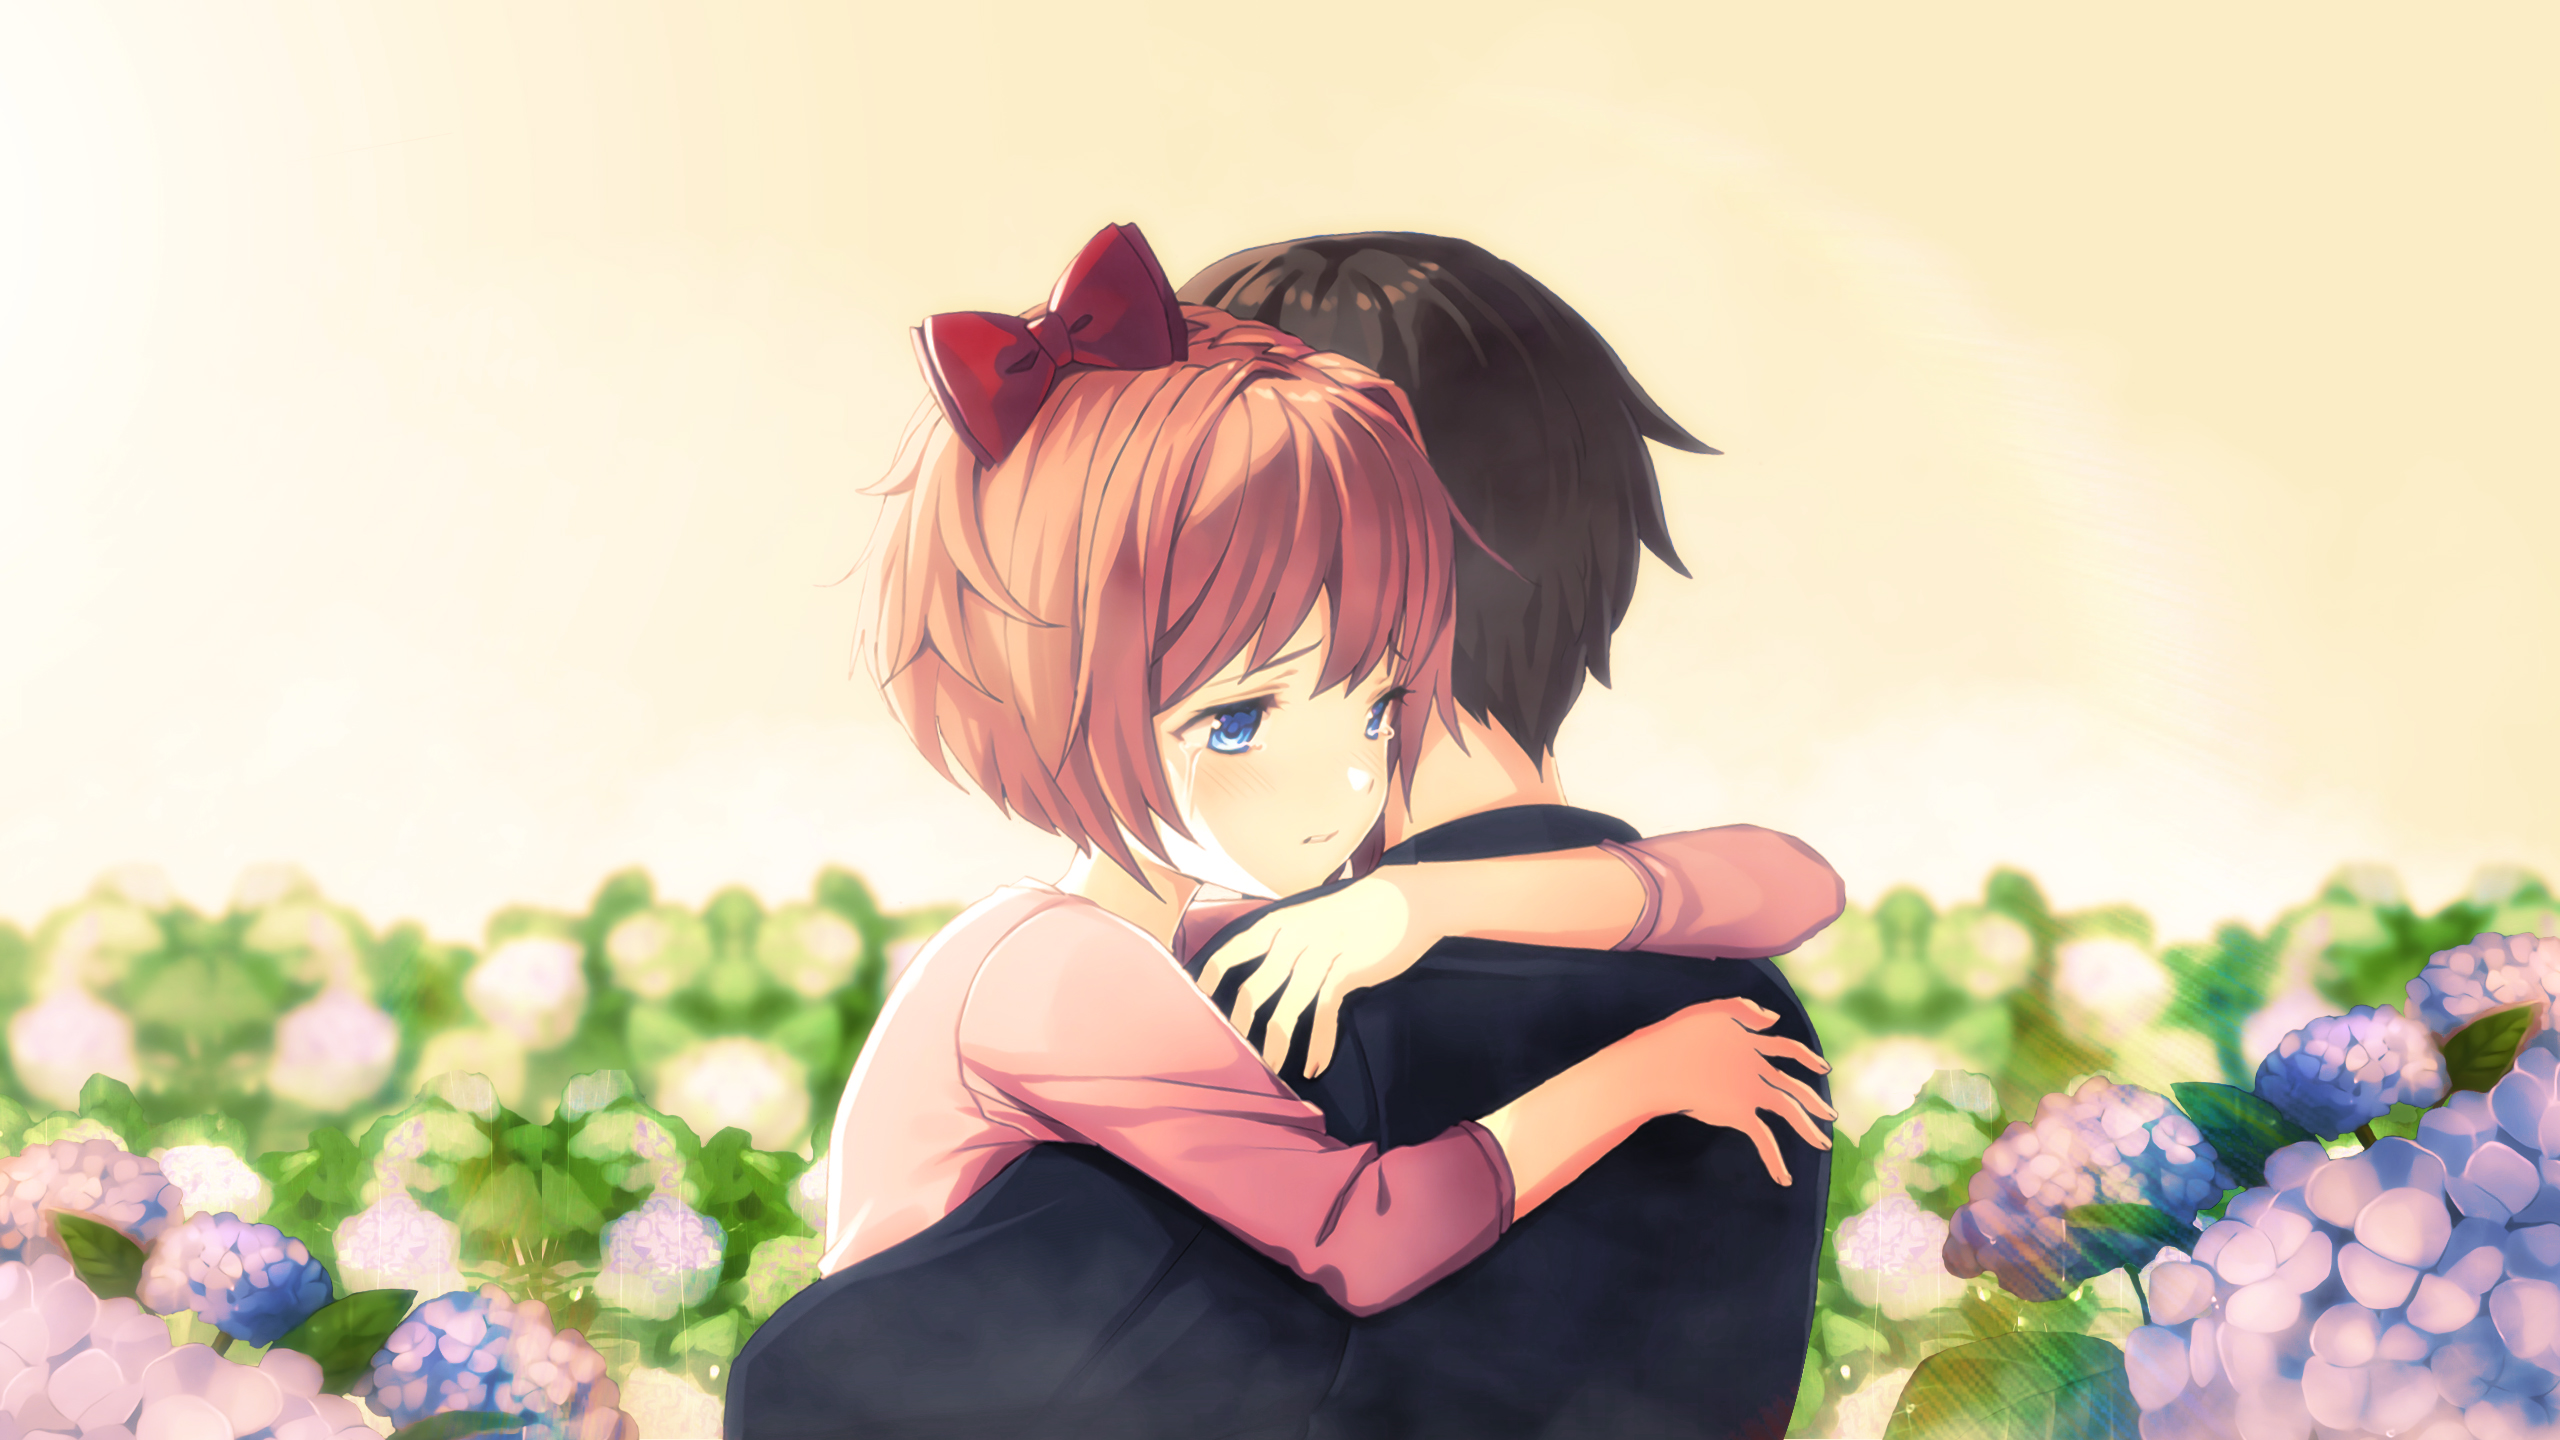 Cute Anime Couple Hug, HD Anime, 4k Wallpapers, Images, Backgrounds